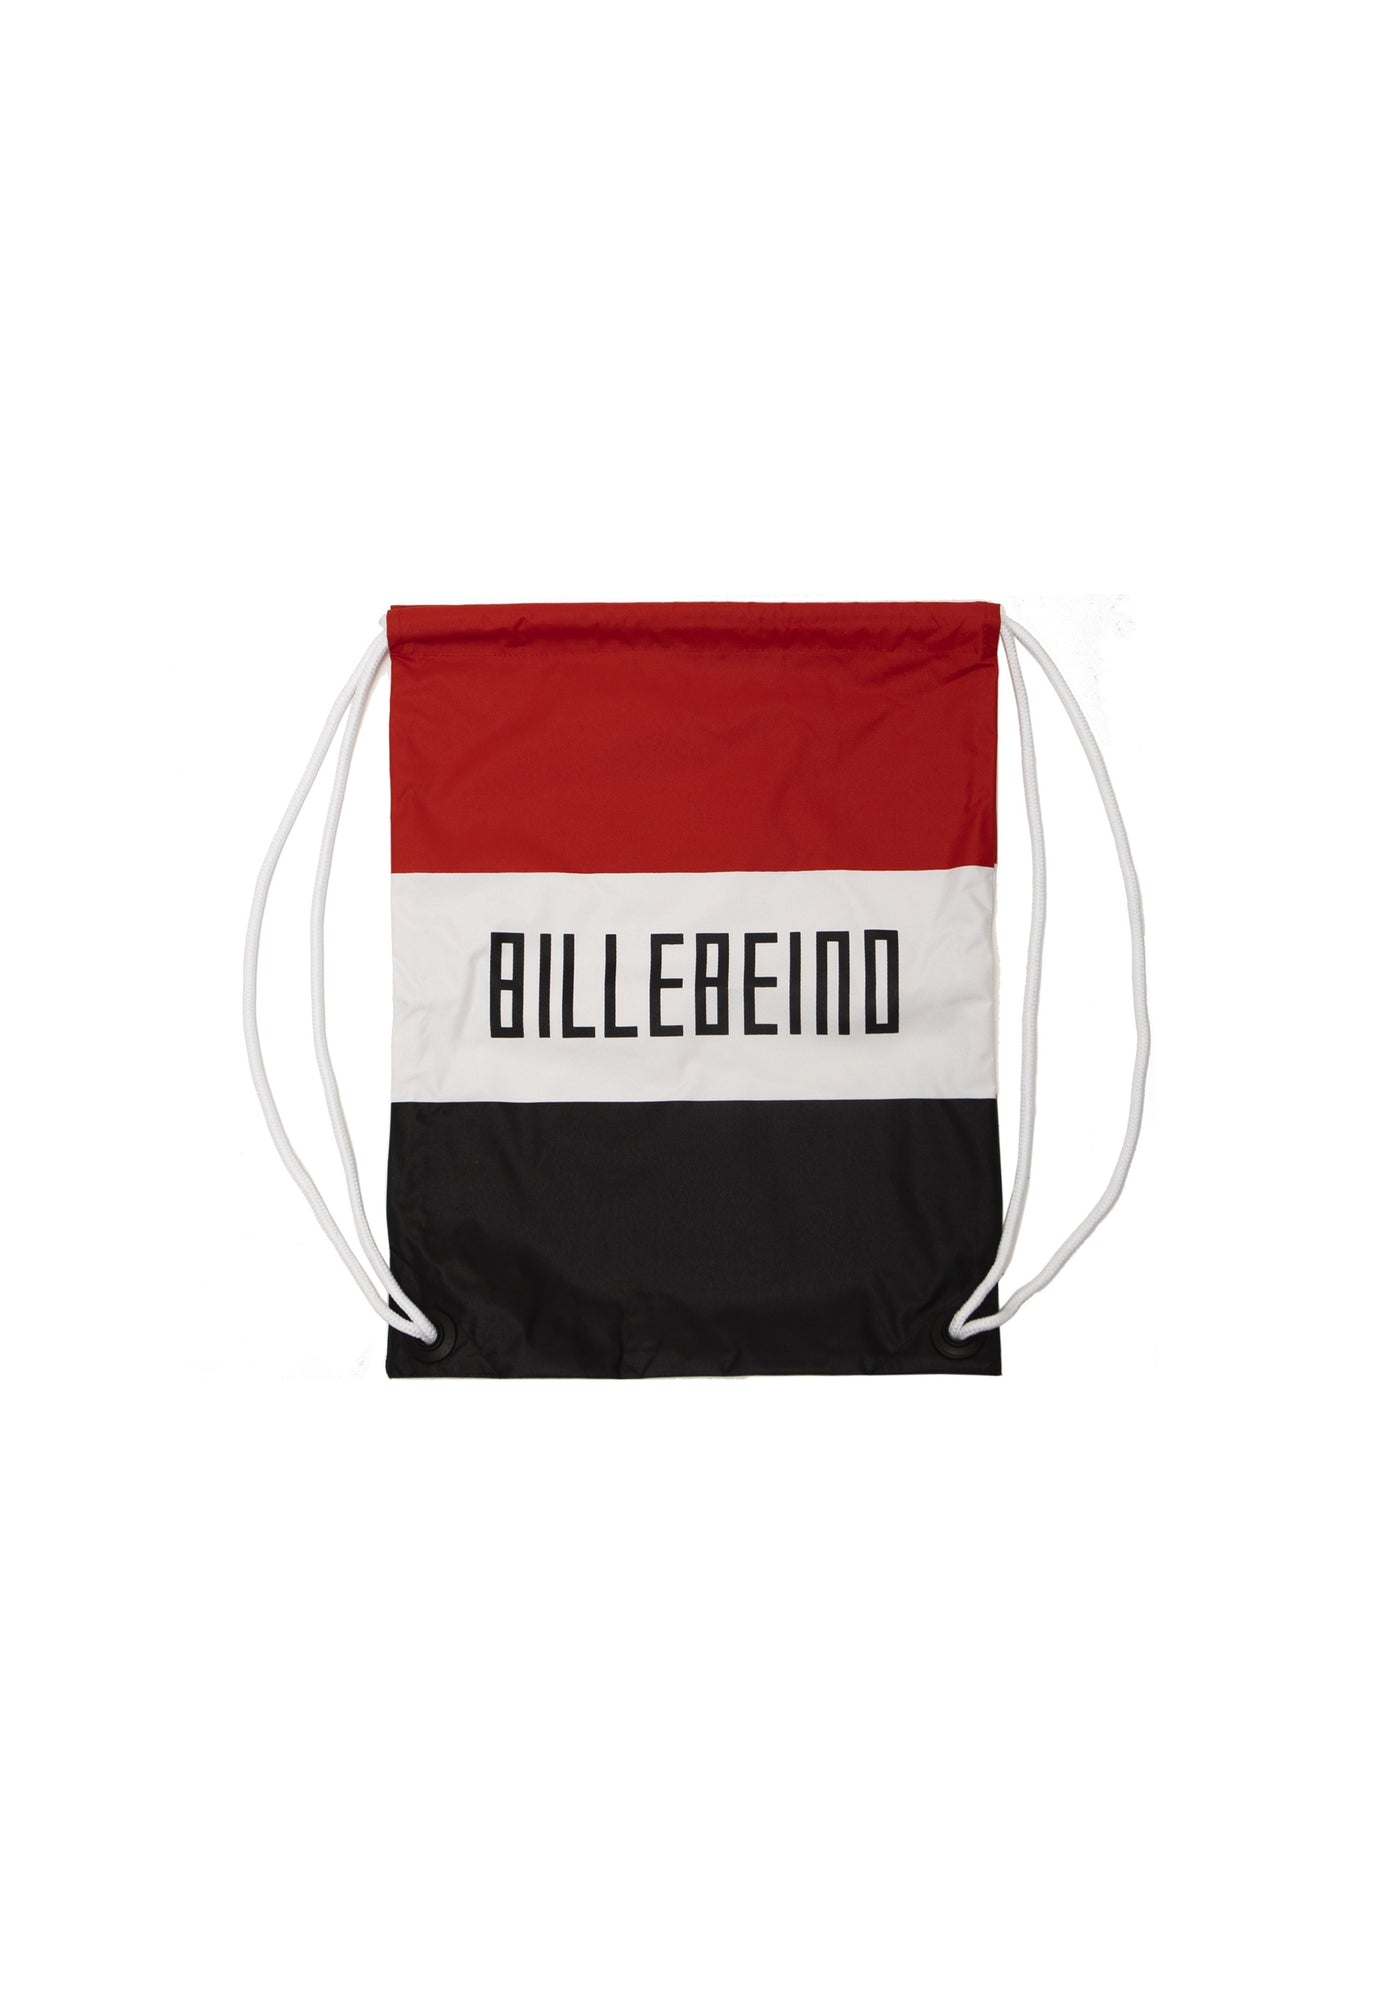 Legion Drawstring Bag Billebeino